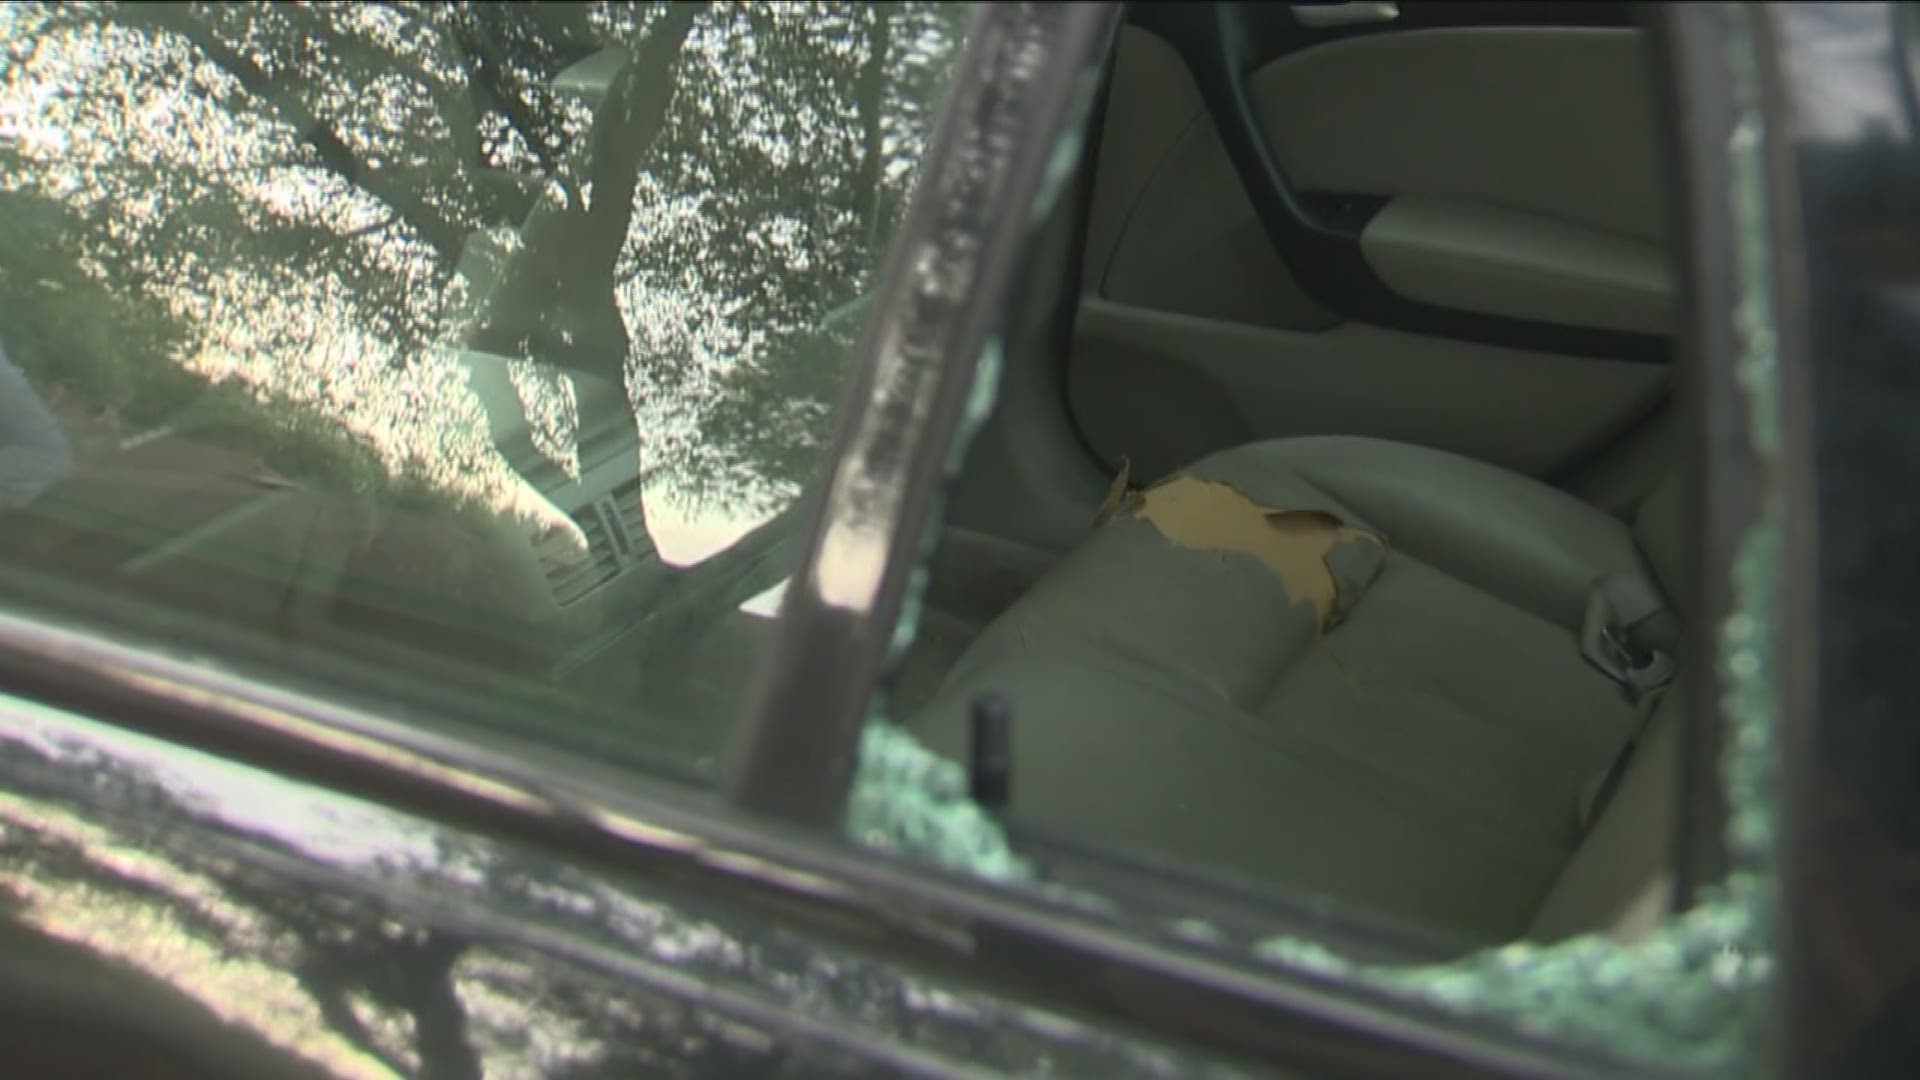 Security video shows a woman chucking a hatchet through a car window in North Austin.